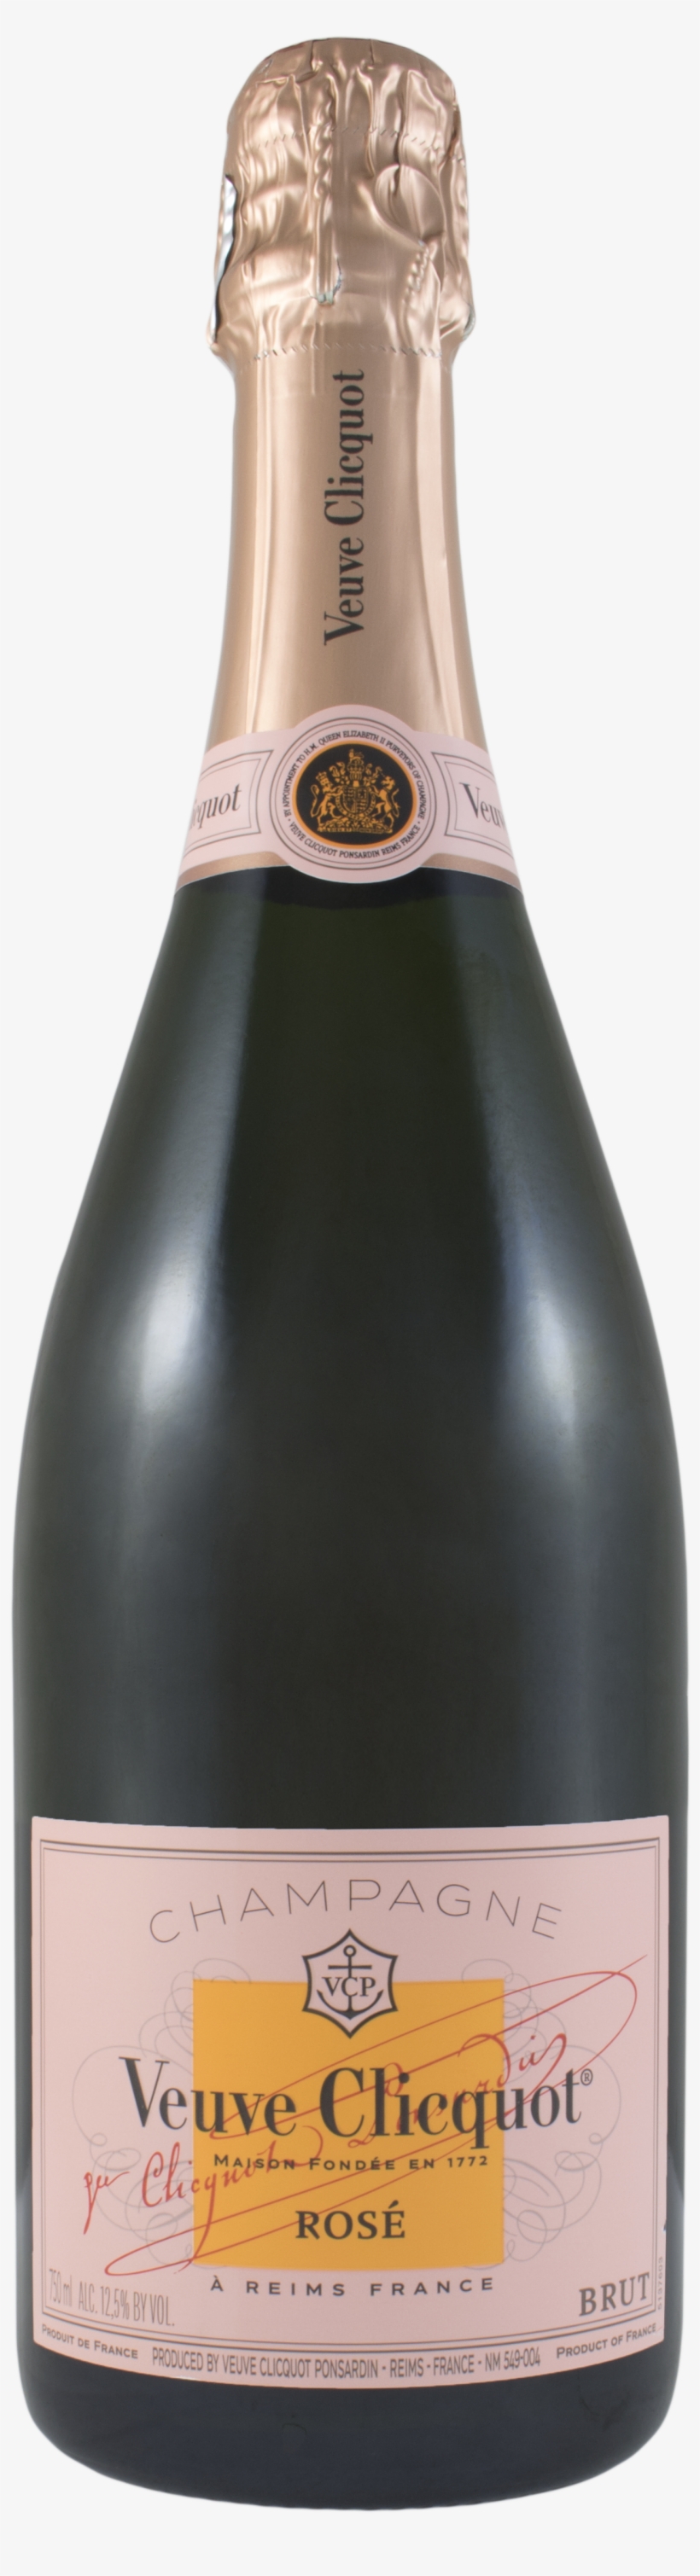 Iphone Label Thumb - Veuve Clicquot Brut Champagne - 750 Ml Bottle, transparent png #4292592